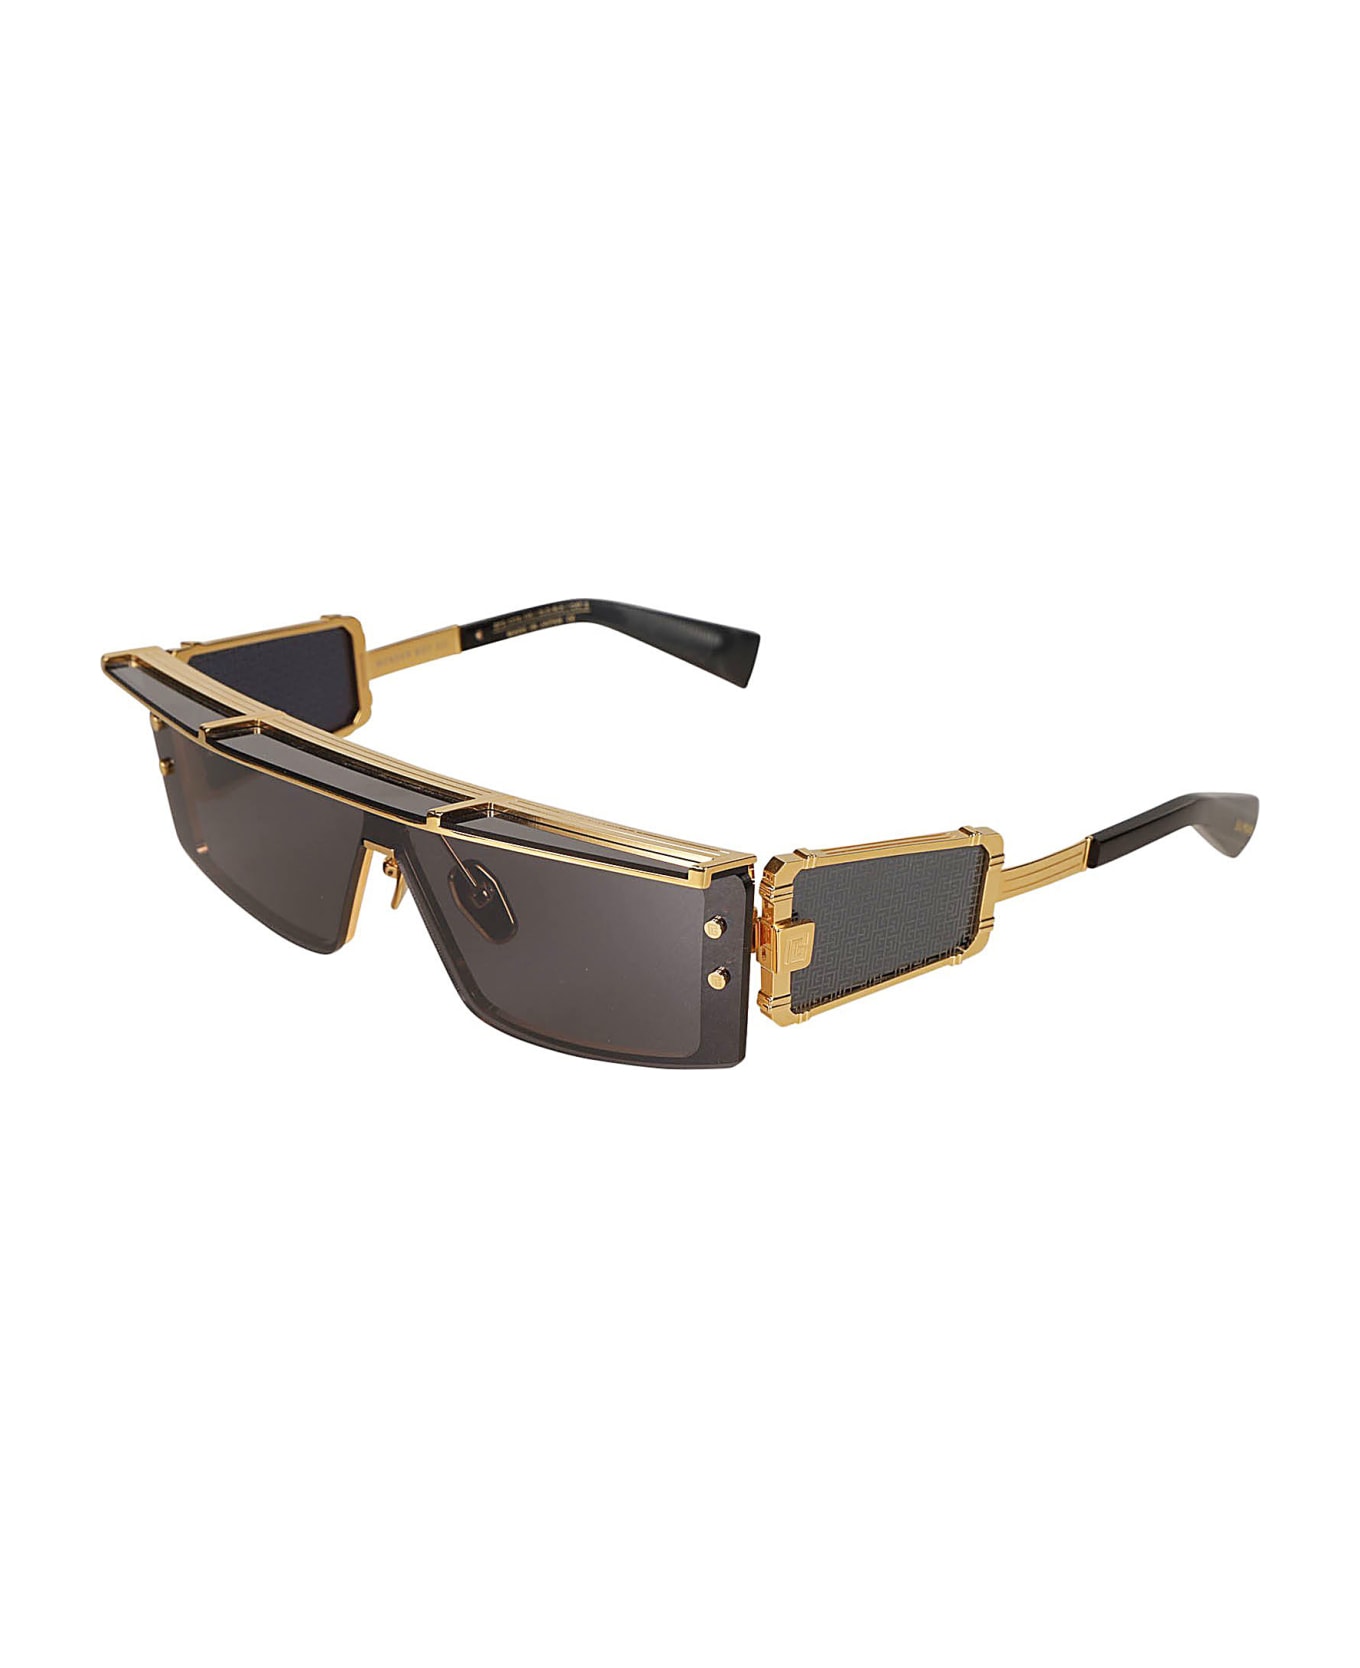 Balmain Wonder Boy Iii Sunglasses Sunglasses - Gold/Black